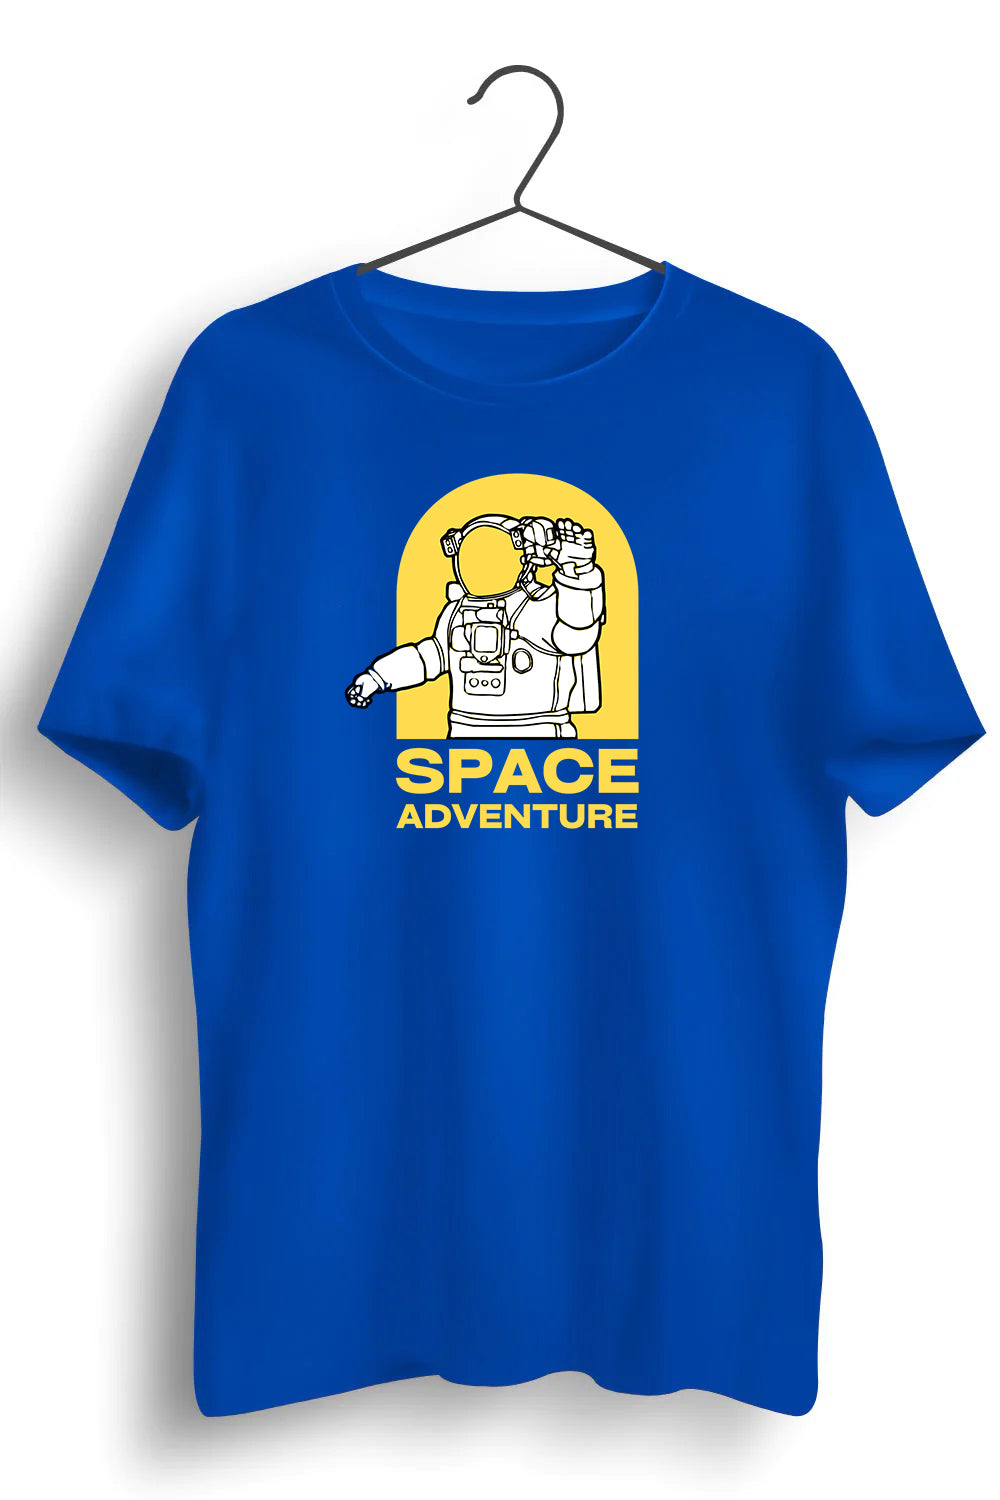 Space Adventure Graphic Printed Blue Tshirt